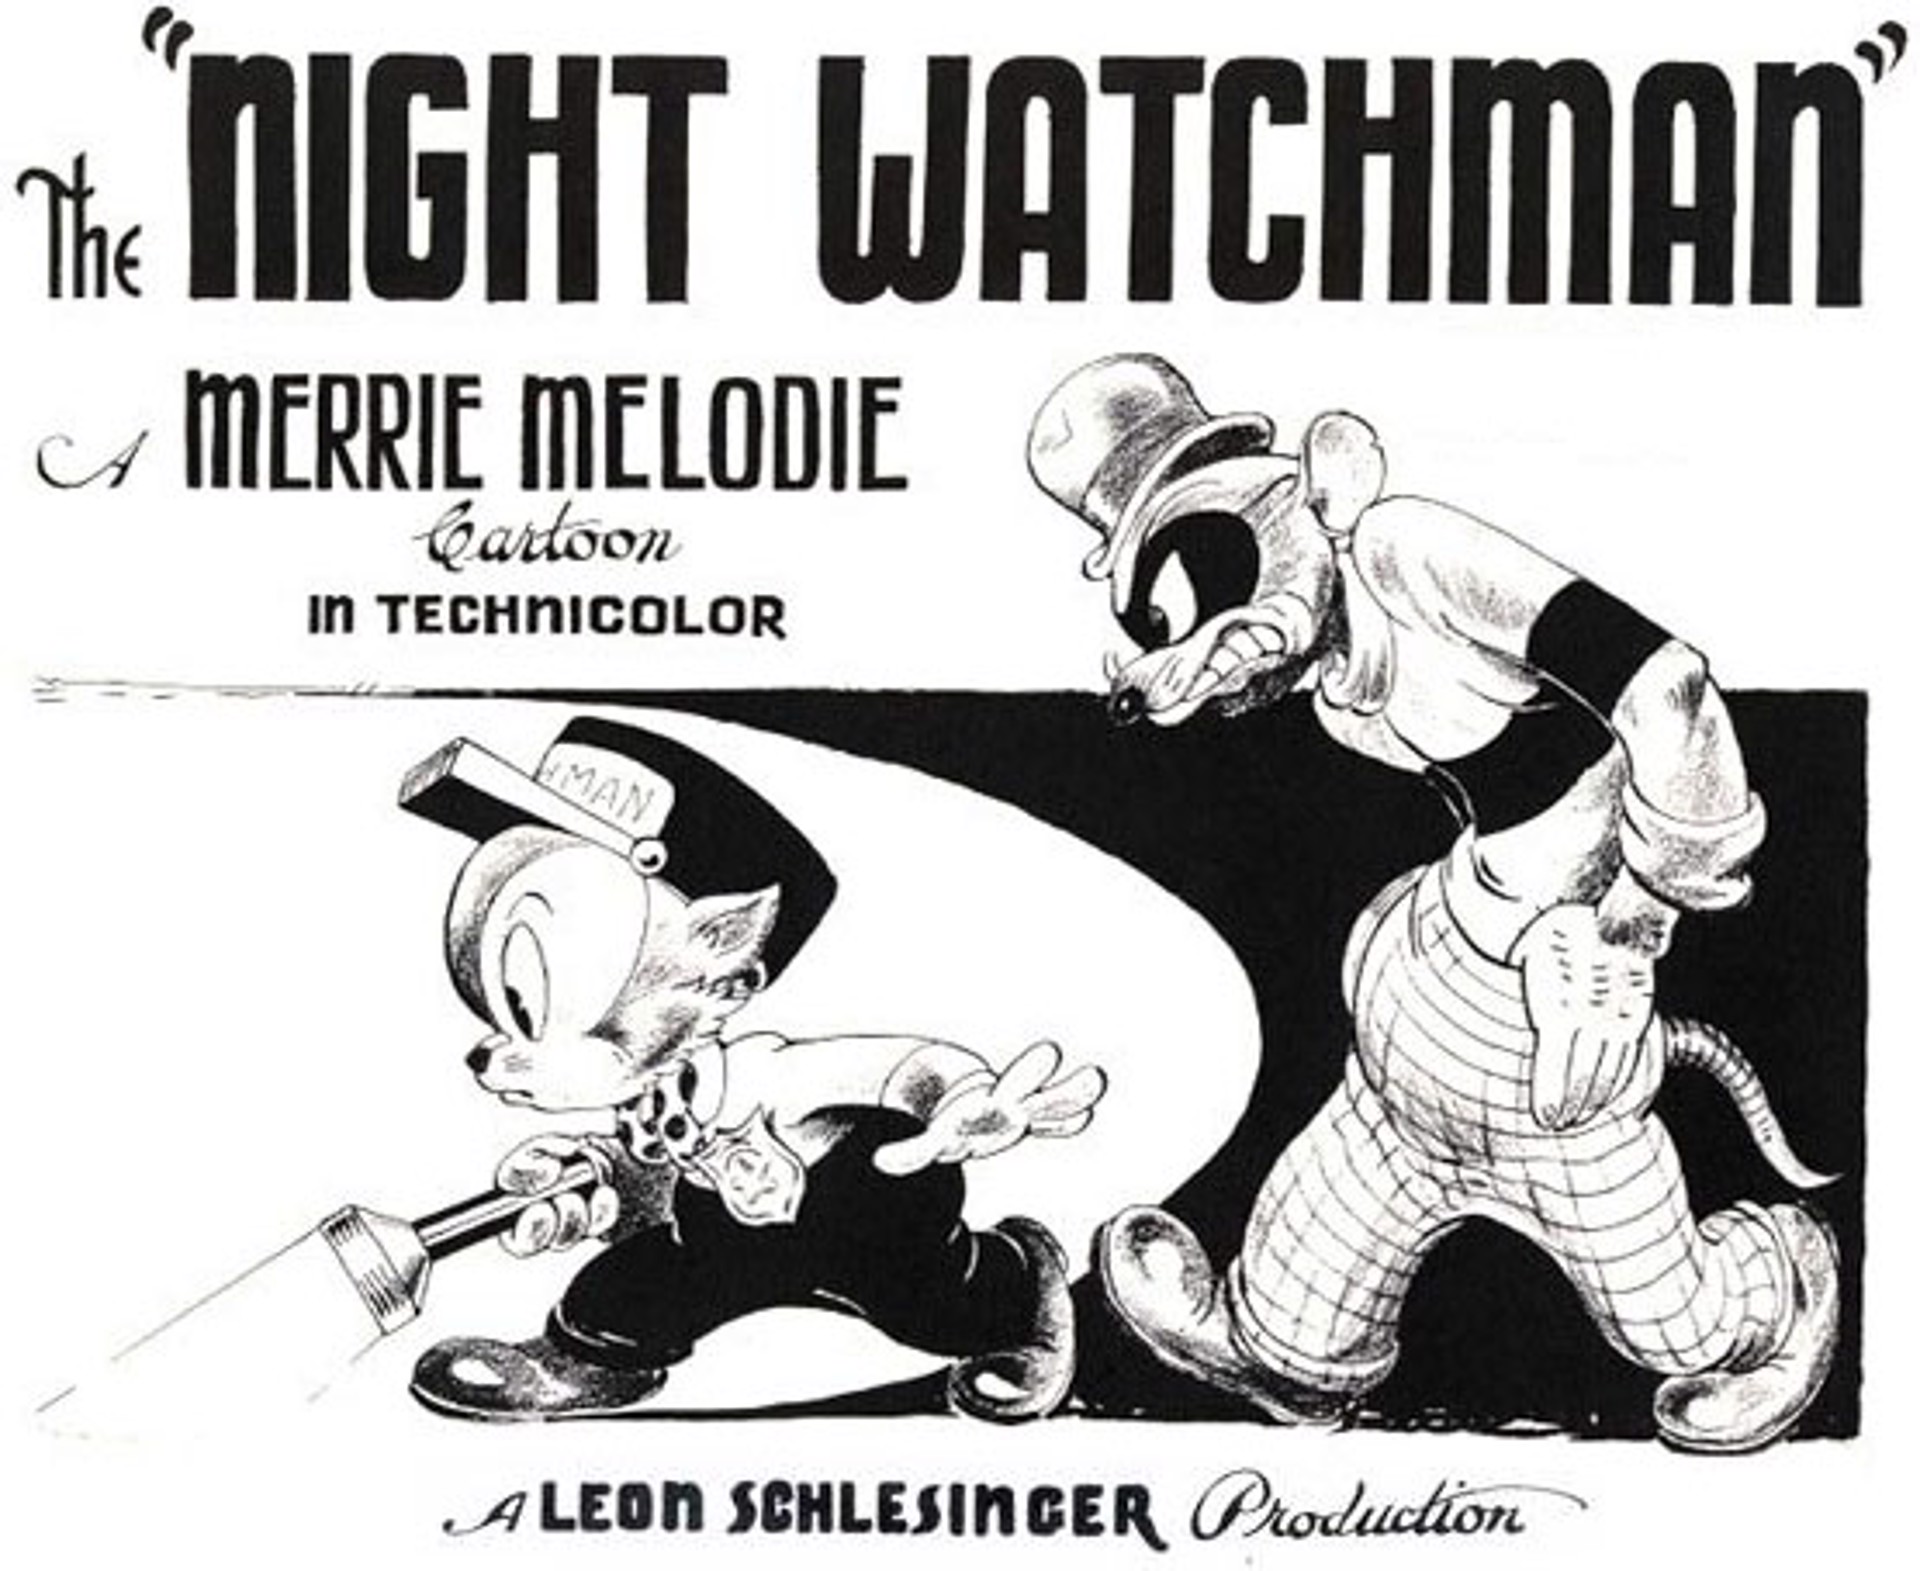 The Night Watchman by Chuck Jones